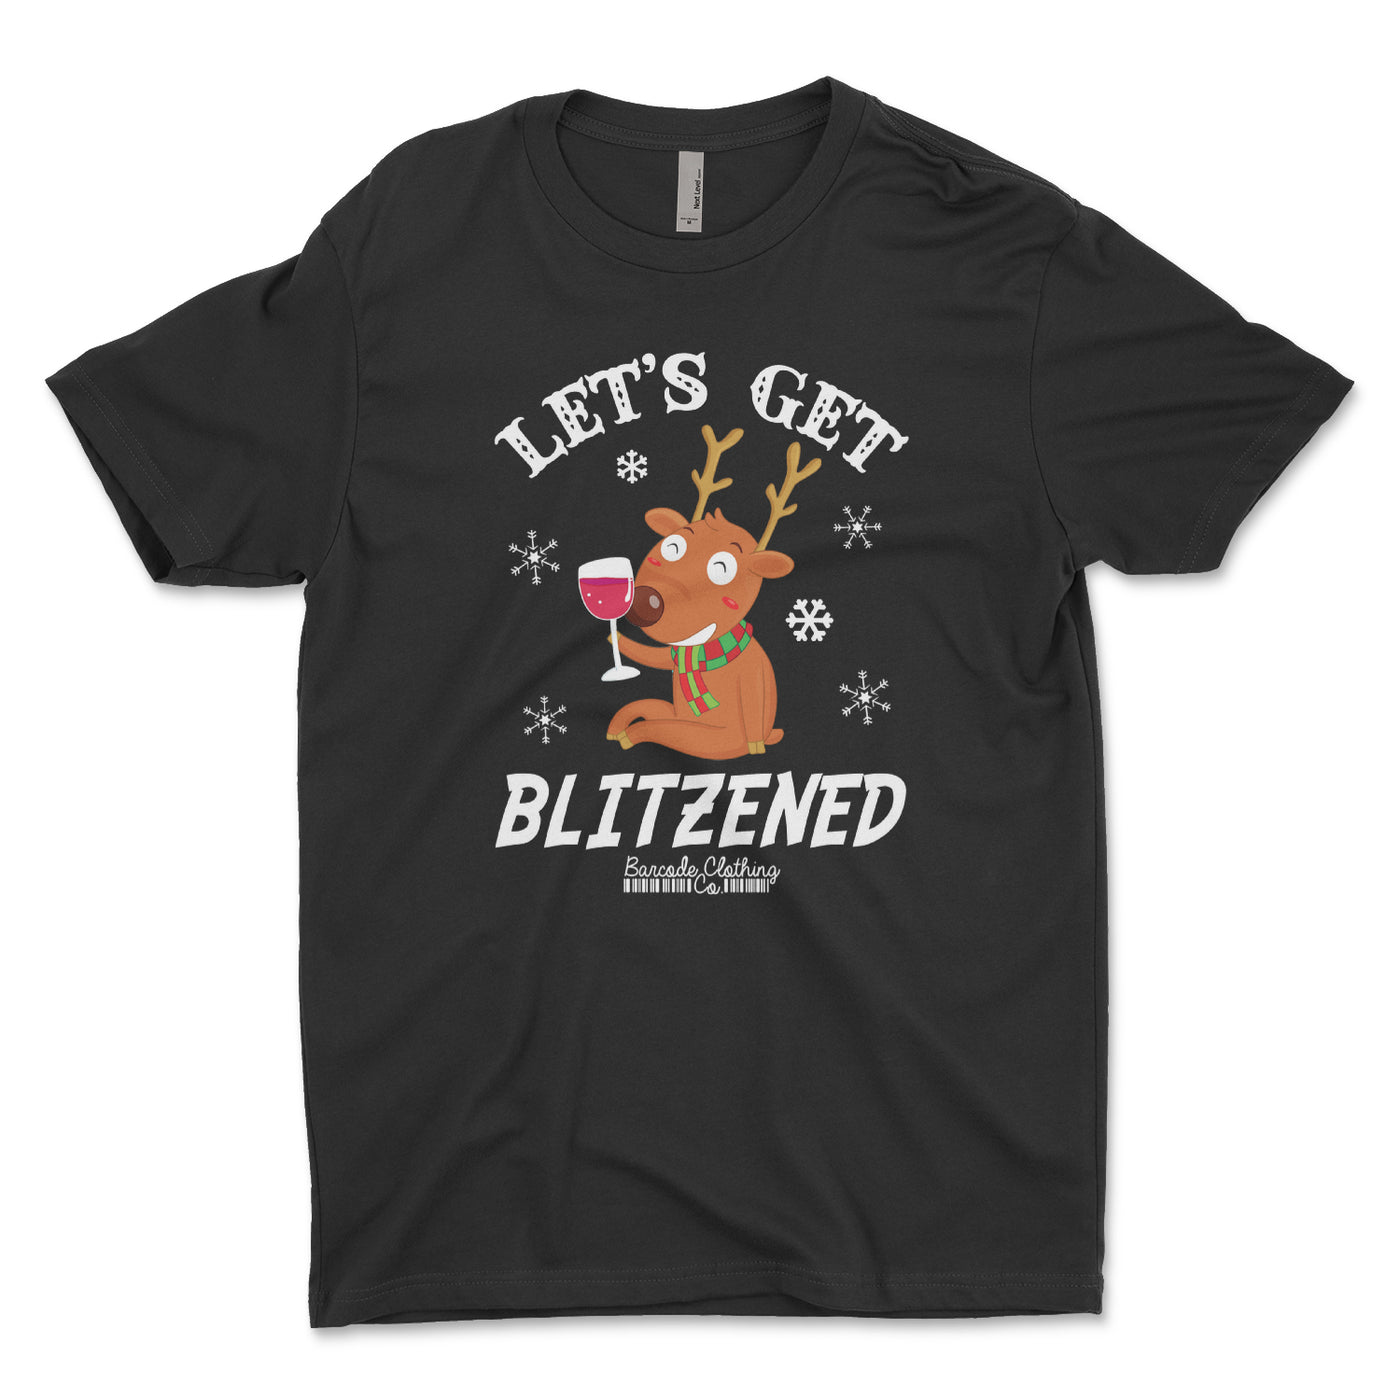 Let's Get Blitzened